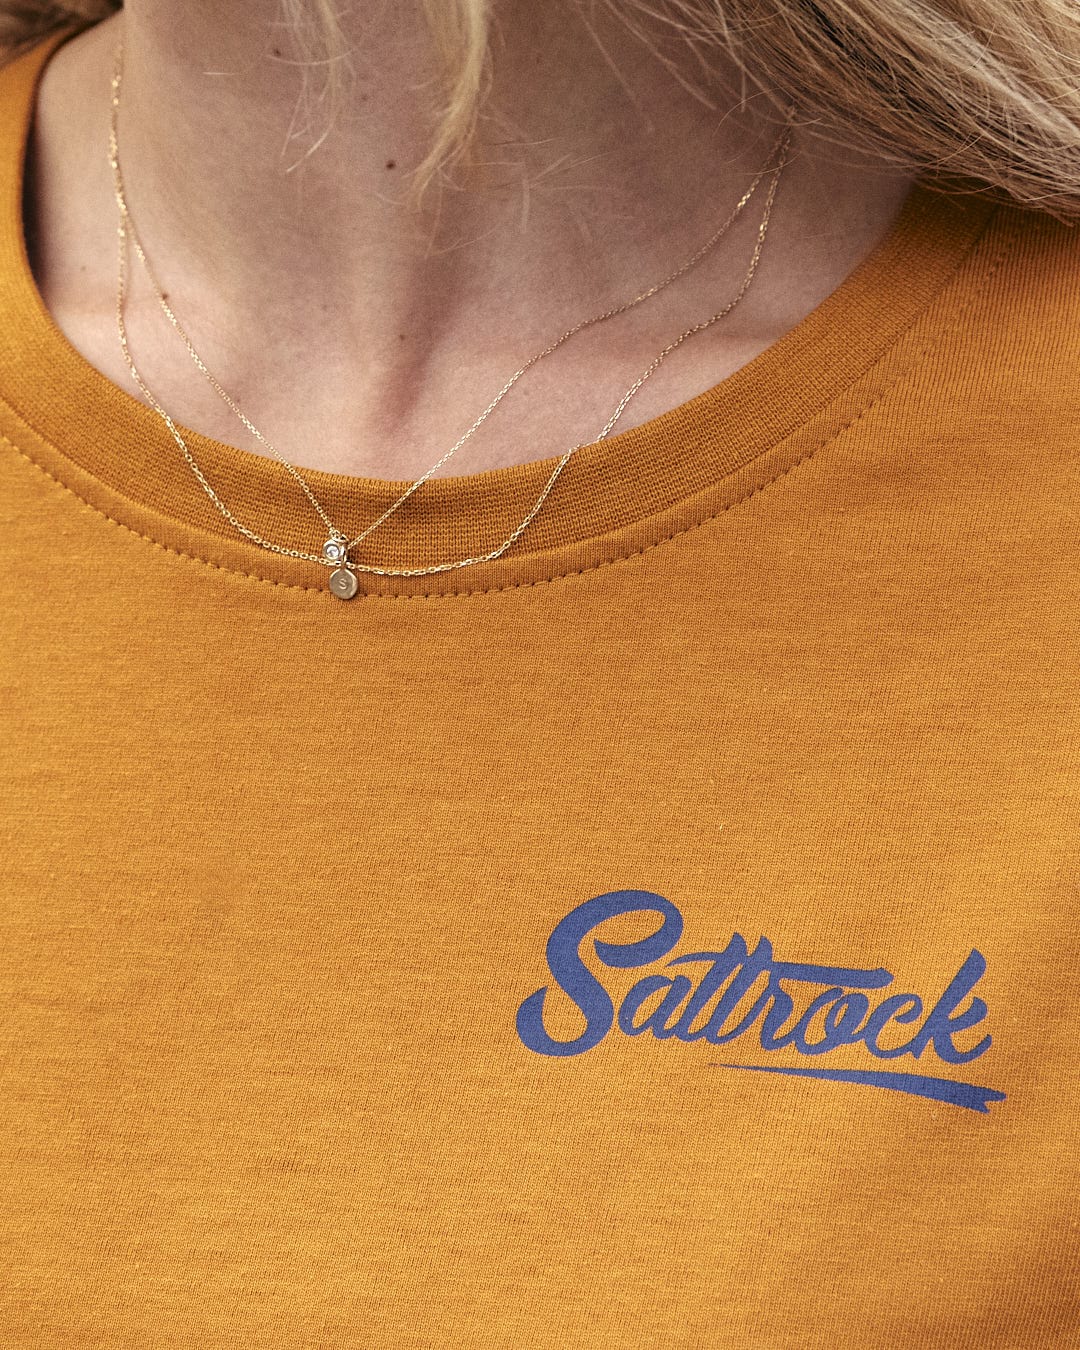 A woman wearing a lightweight fabric yellow t-shirt with the Saltrock branding.